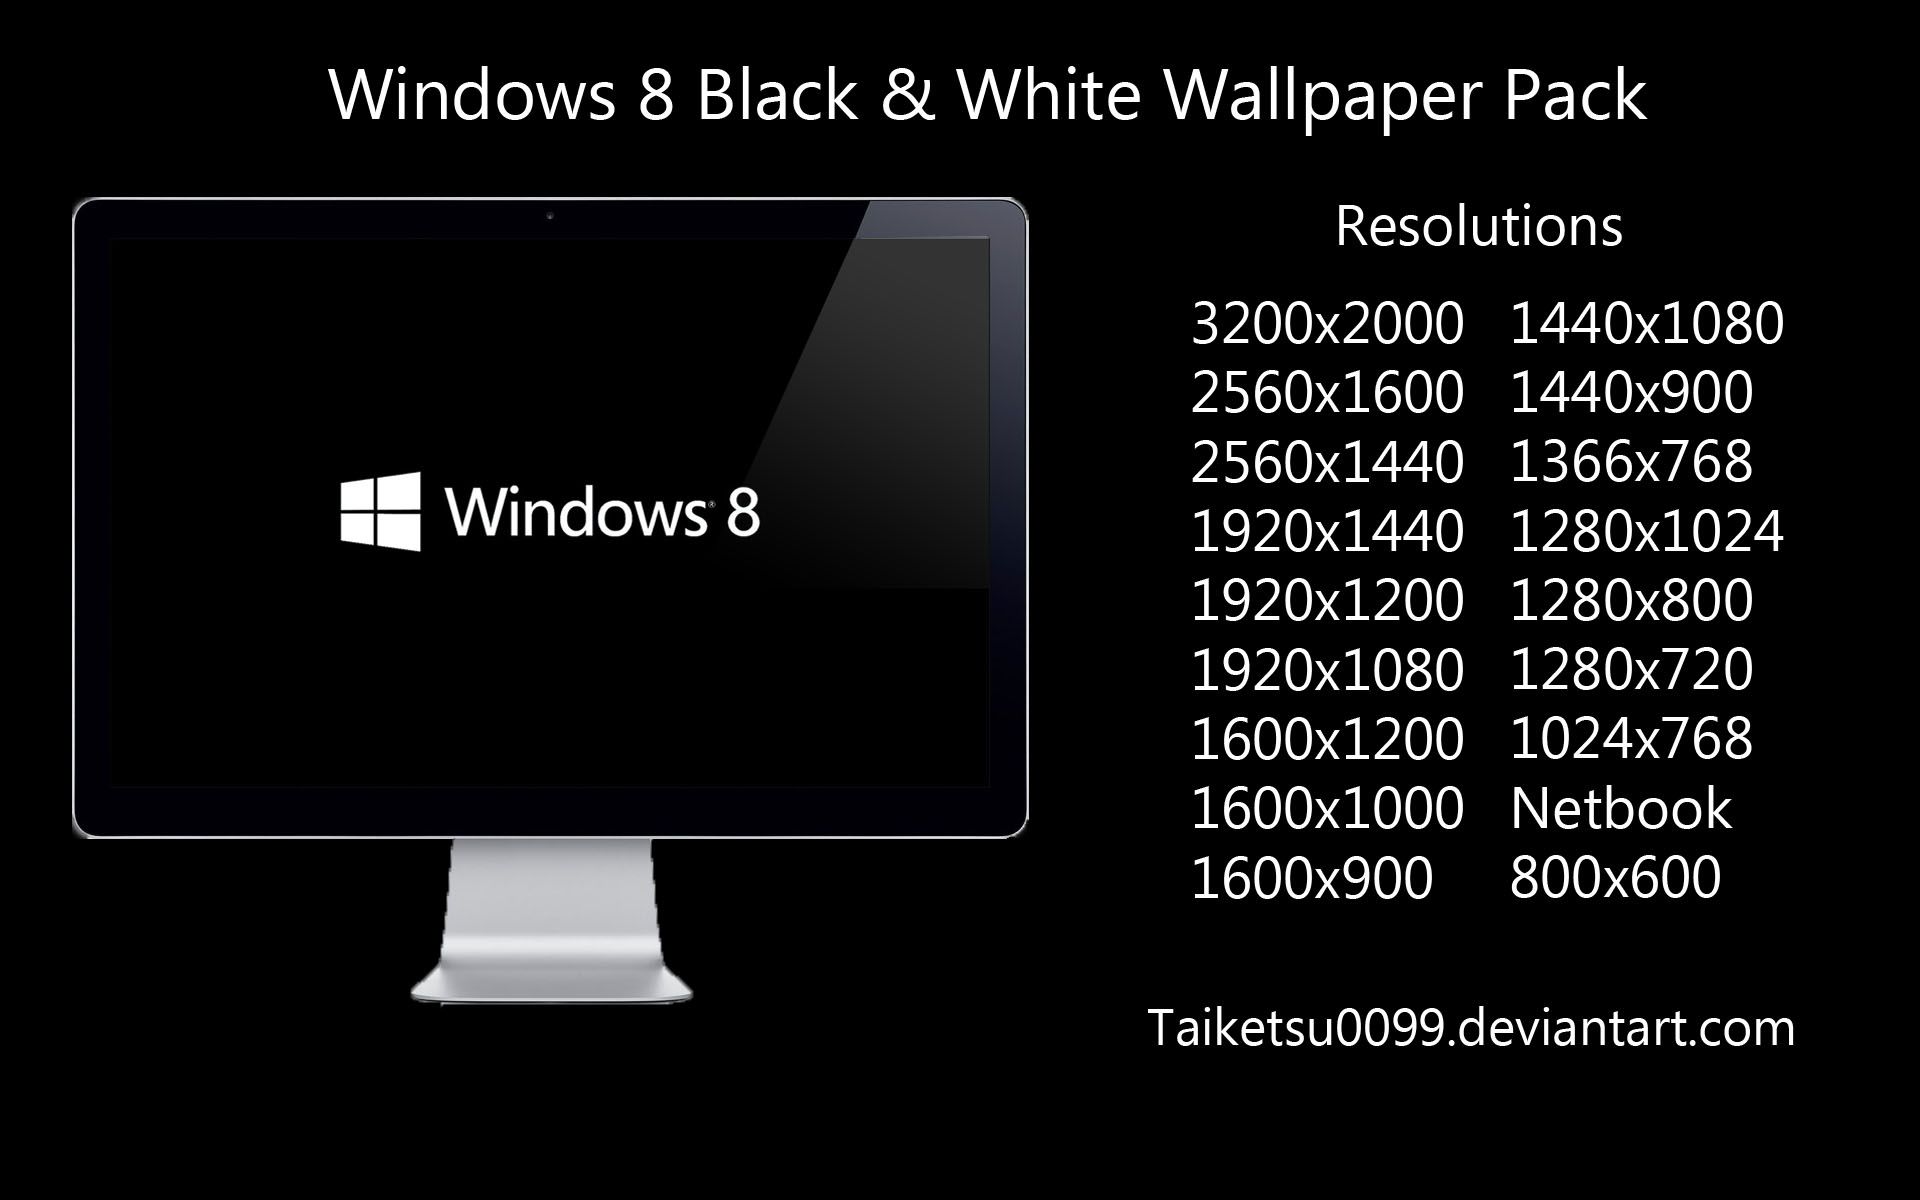 Windows 8 Black and White Wallpaper Pack by Taiketsu0099 on DeviantArt